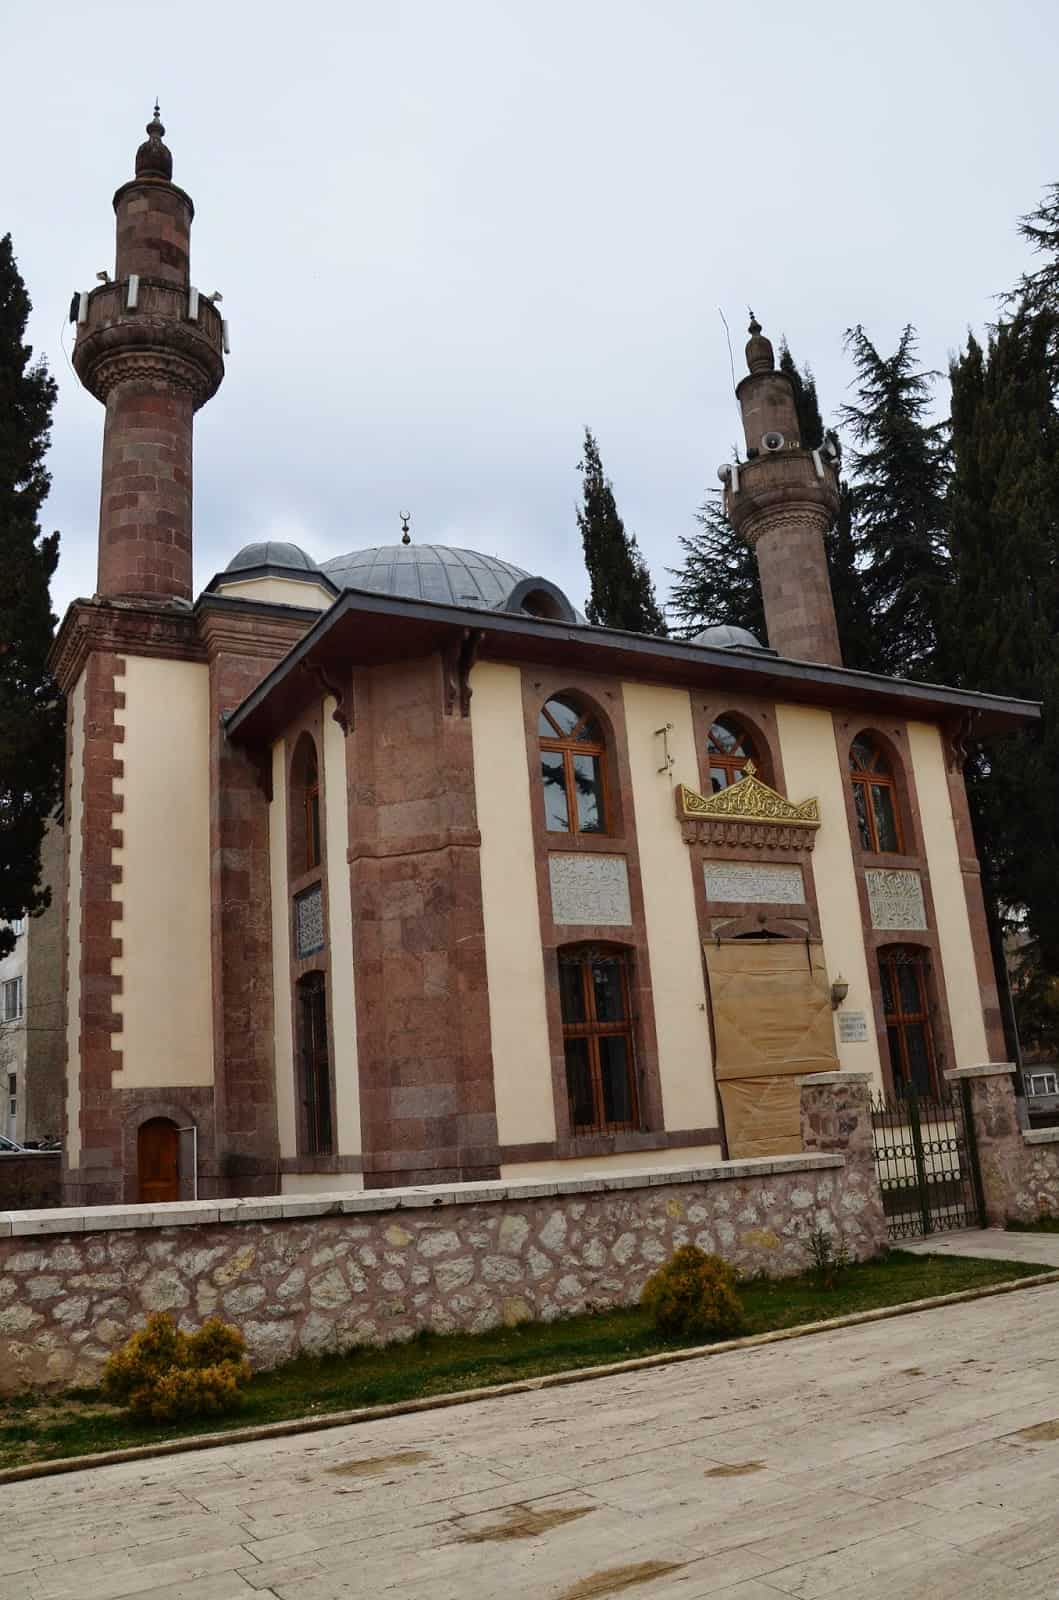 Çifte Minareli Hamidiye Camii in Söğüt, Turkey